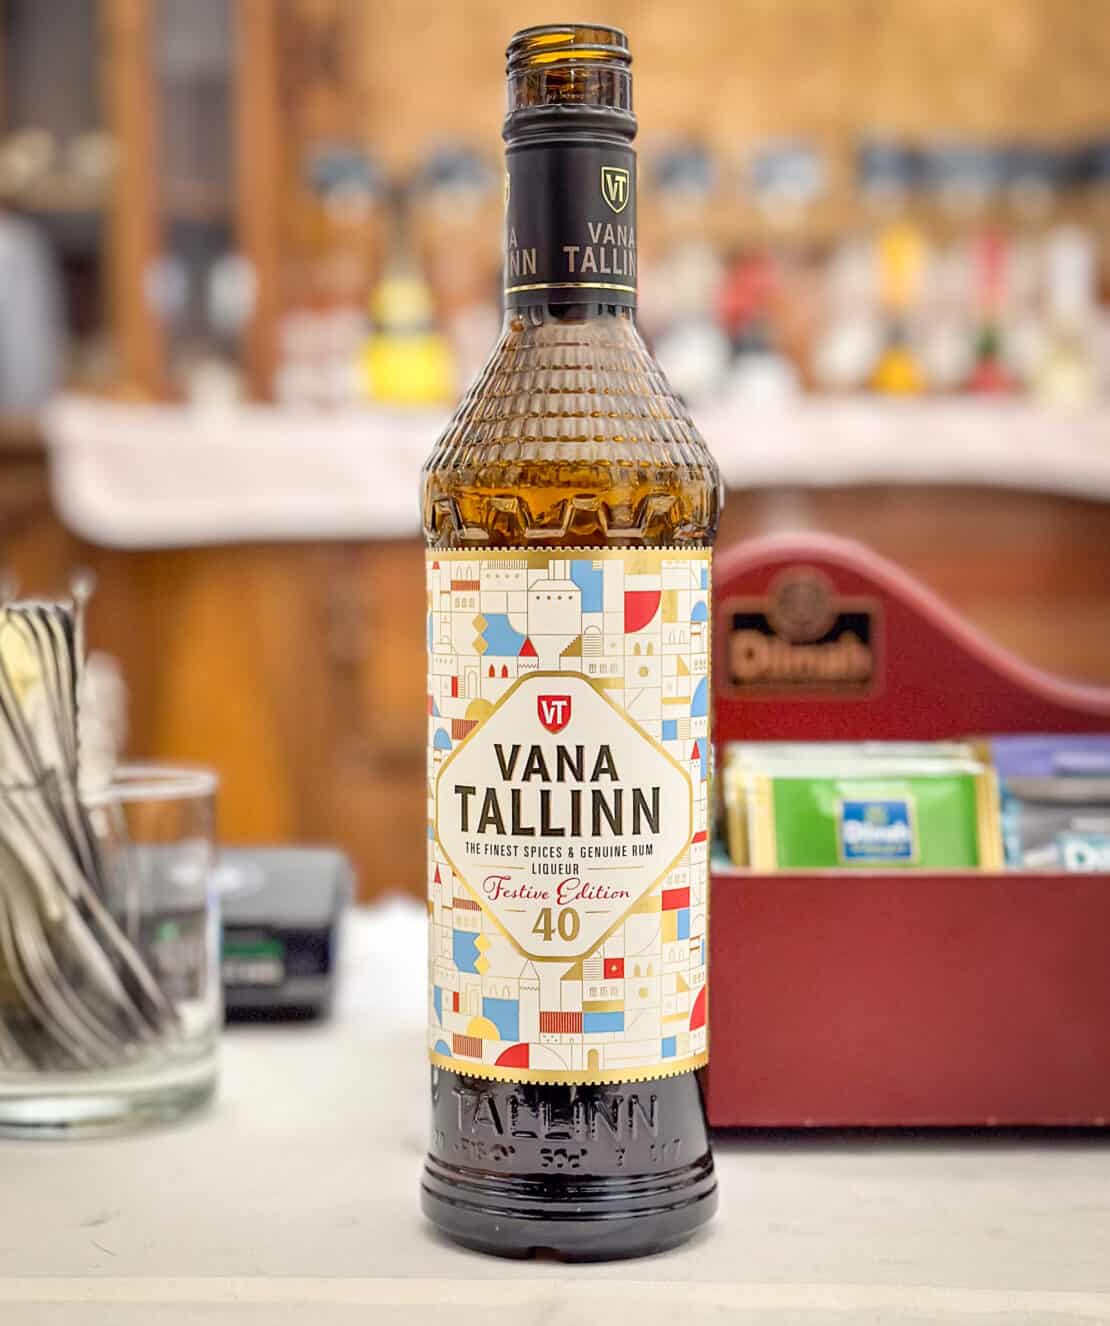 A bottle of Vana Tallinn, a traditional Estonian liqueur